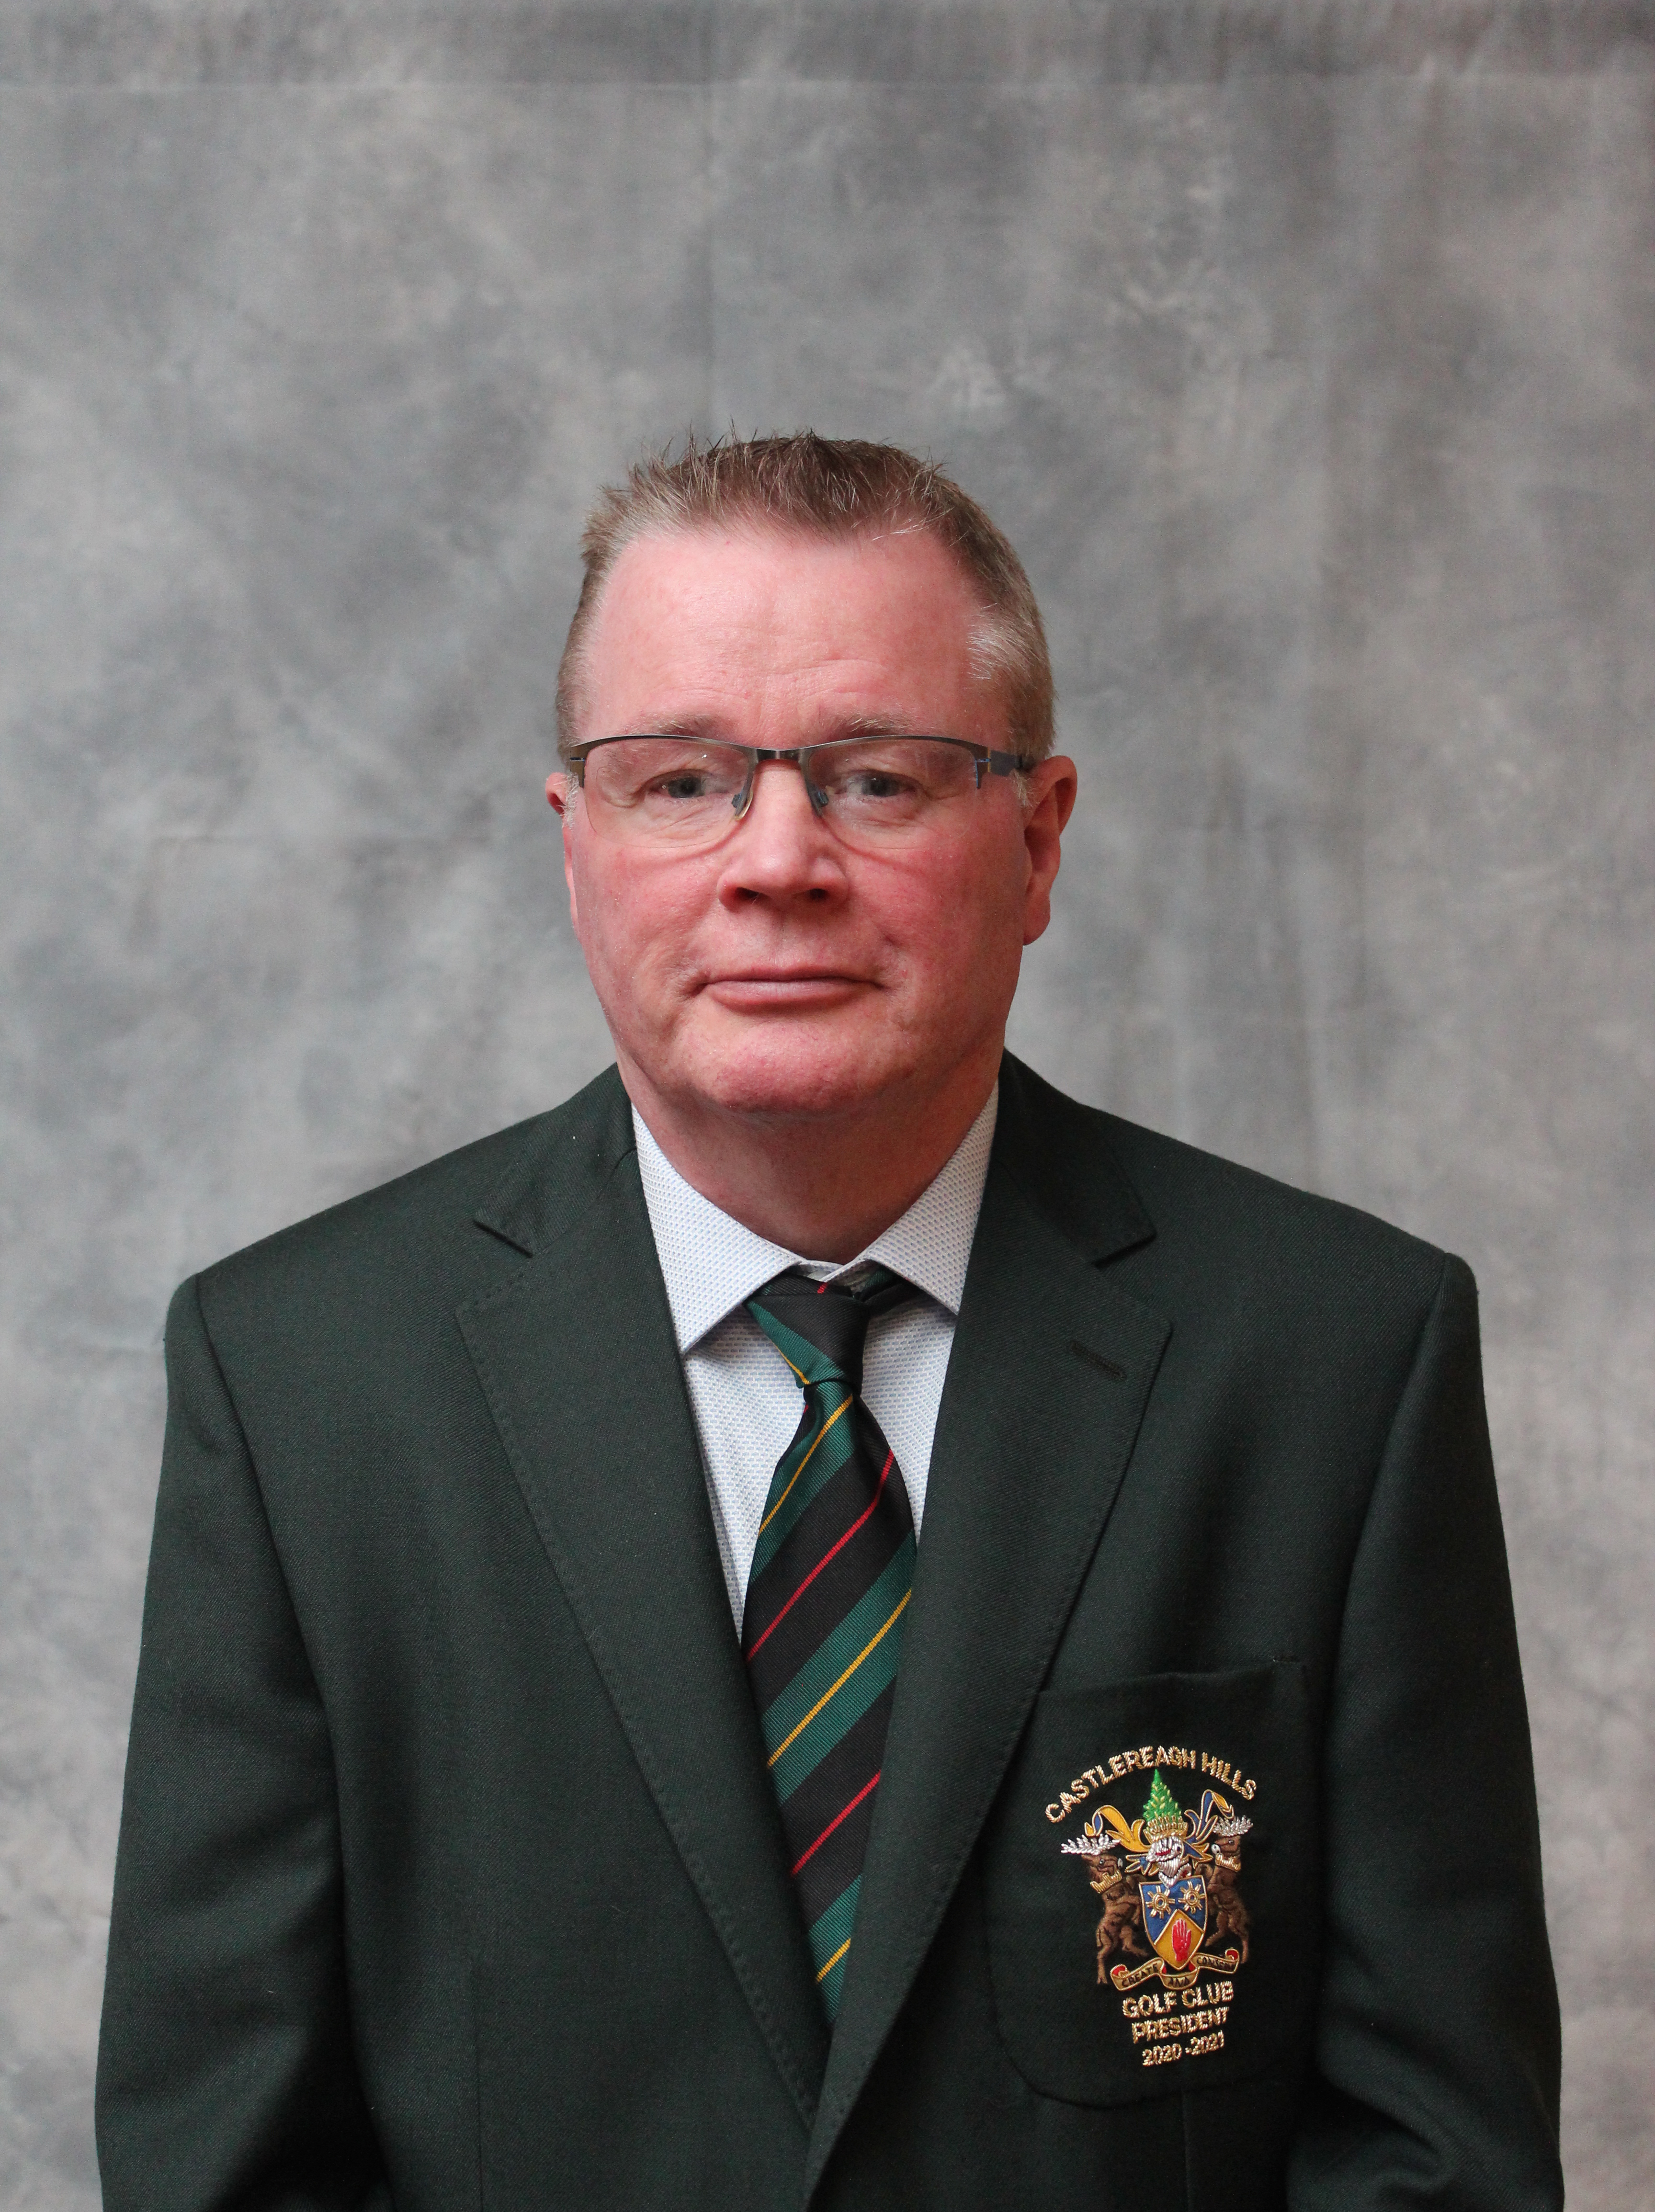 Castlereagh Hills Golf Club President - Wilson Johnston